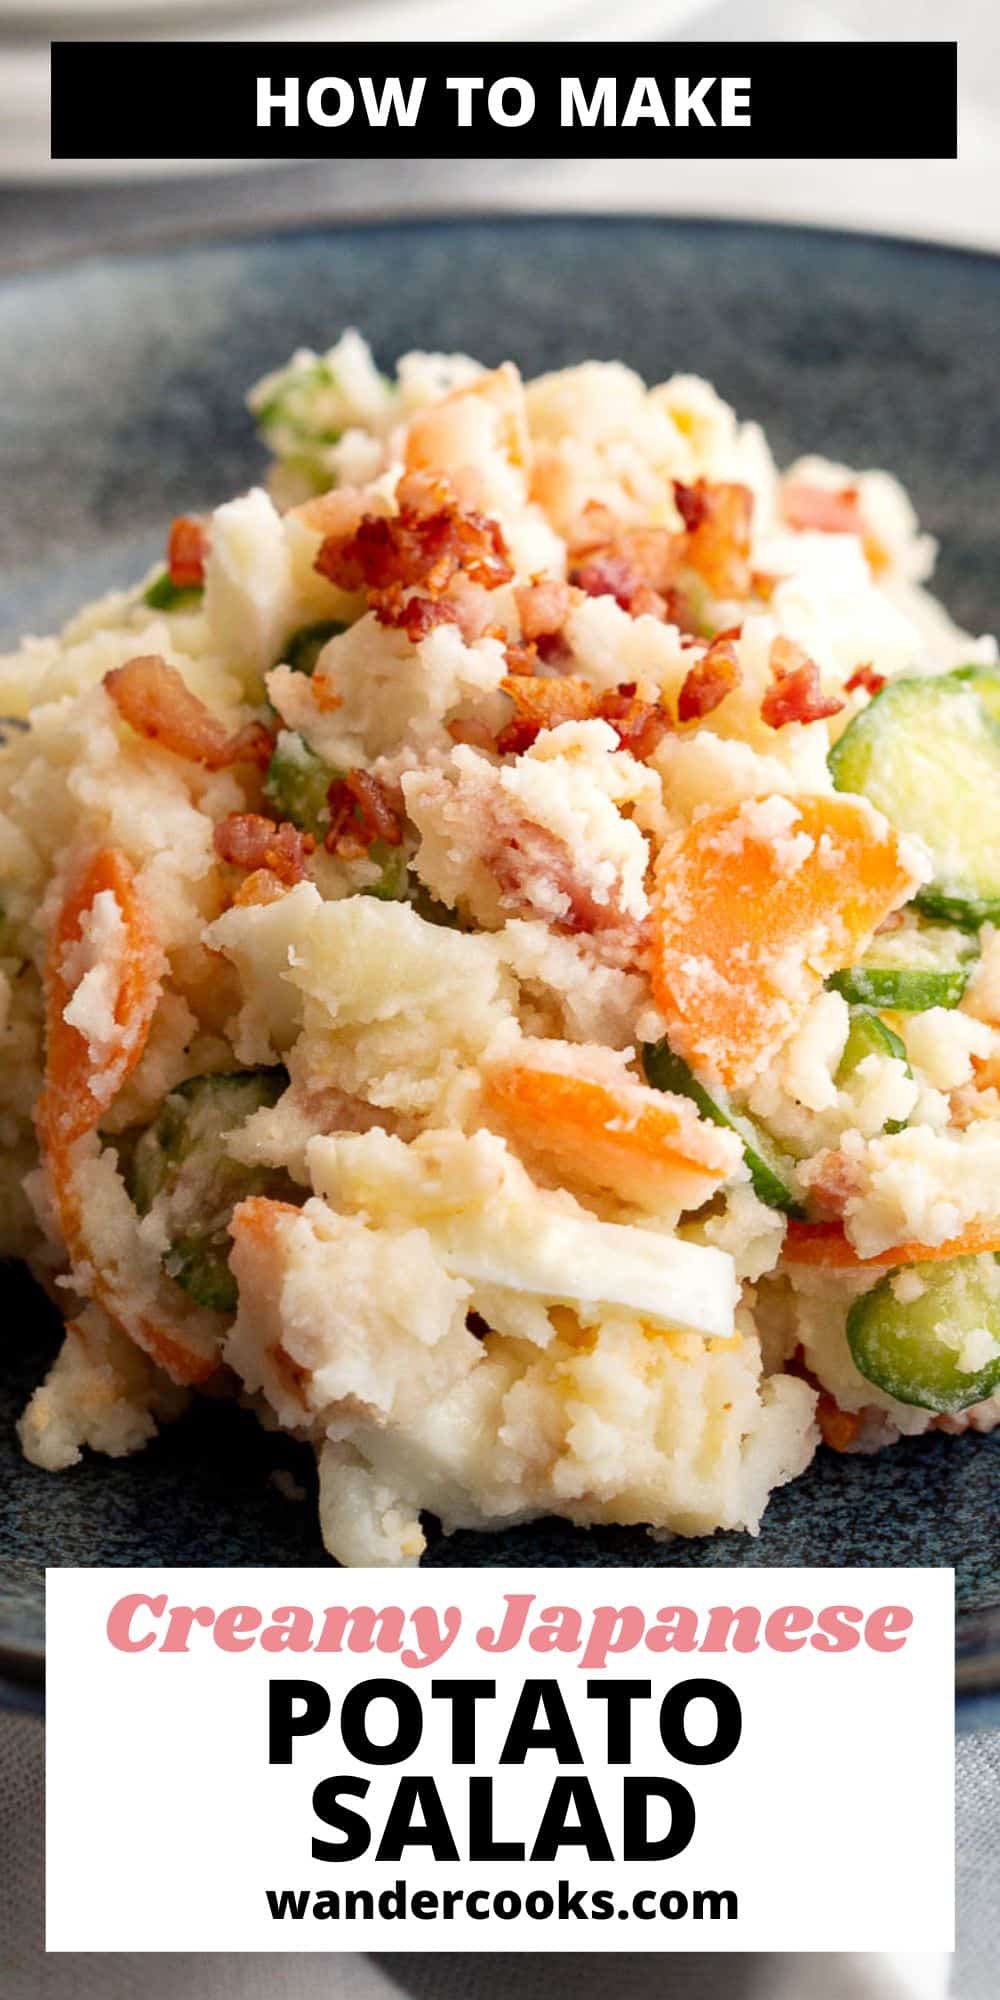 Creamy Japanese Potato Salad